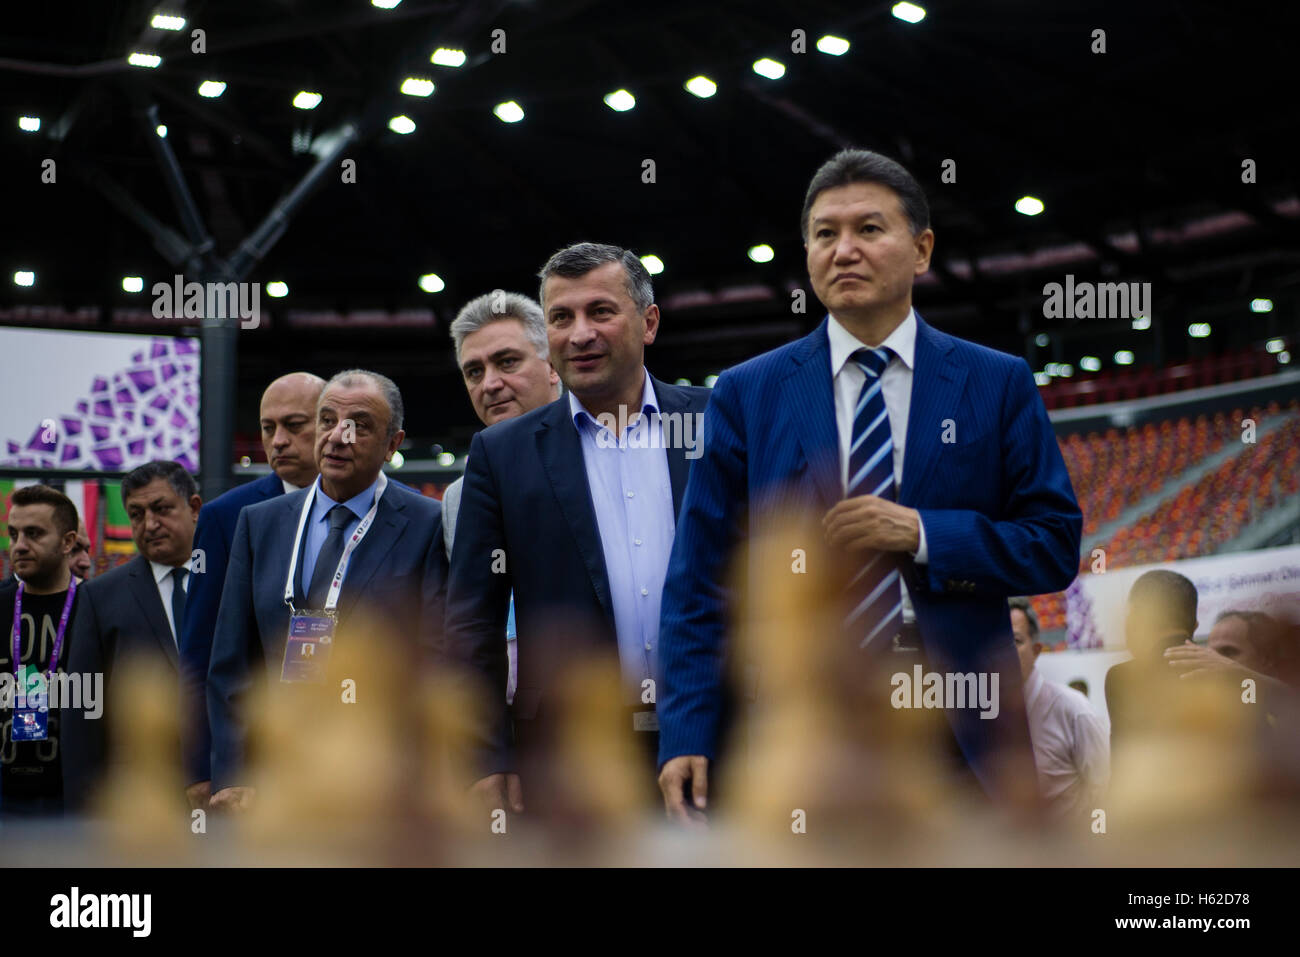 President of FIDE Kirsan Ilyumzhinov during the final round at the 42nd Chess Olympiad in Baku, Azerbaijan on Tuesday, September 13, 2016. Stock Photo